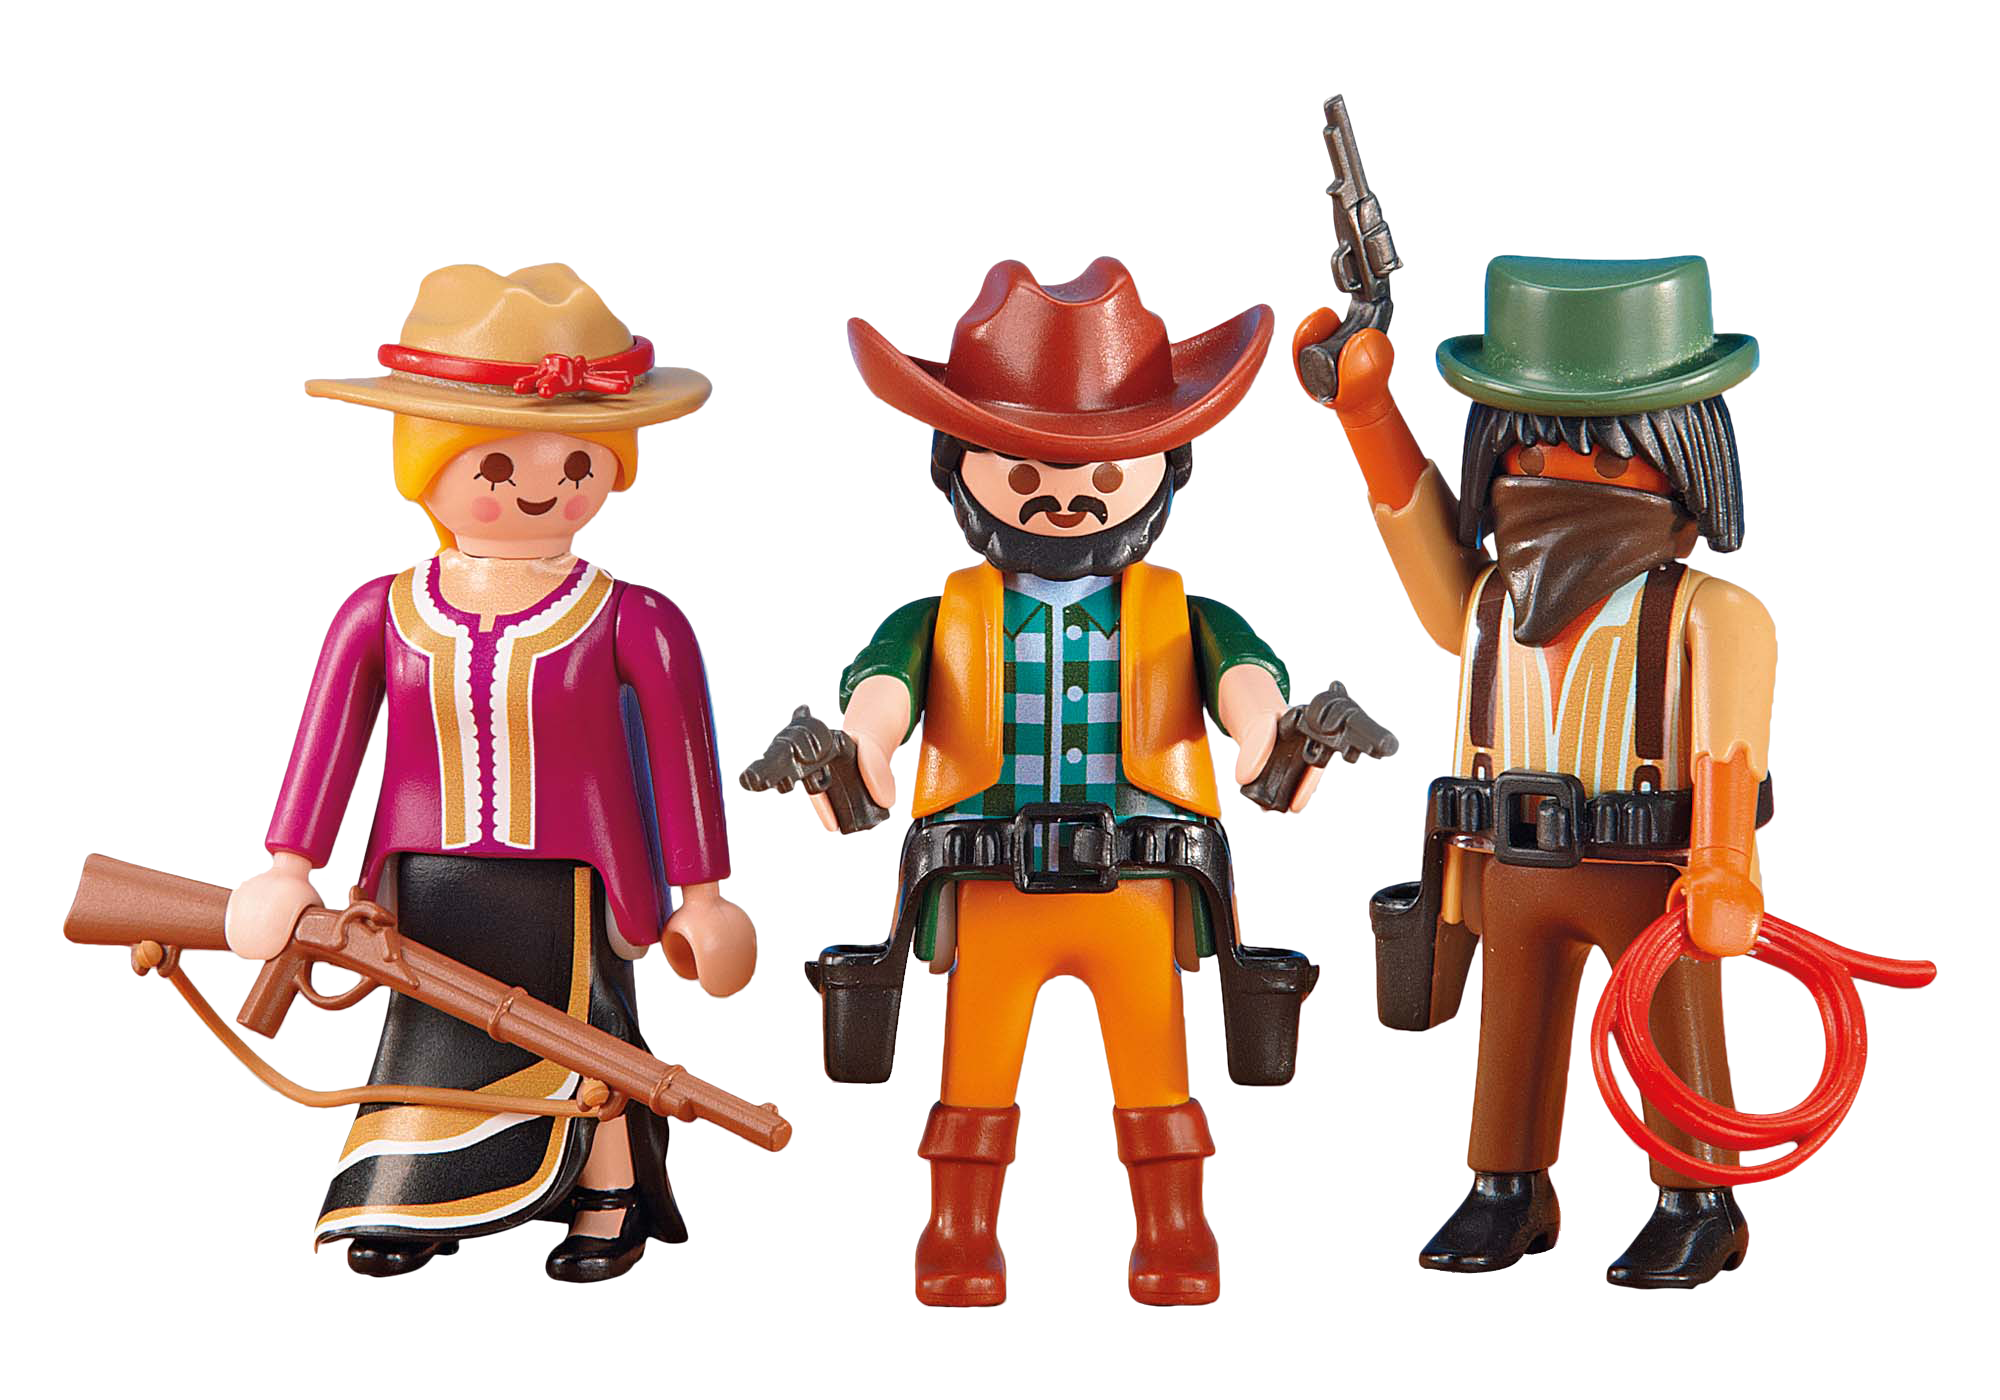 playmobil cowboys western